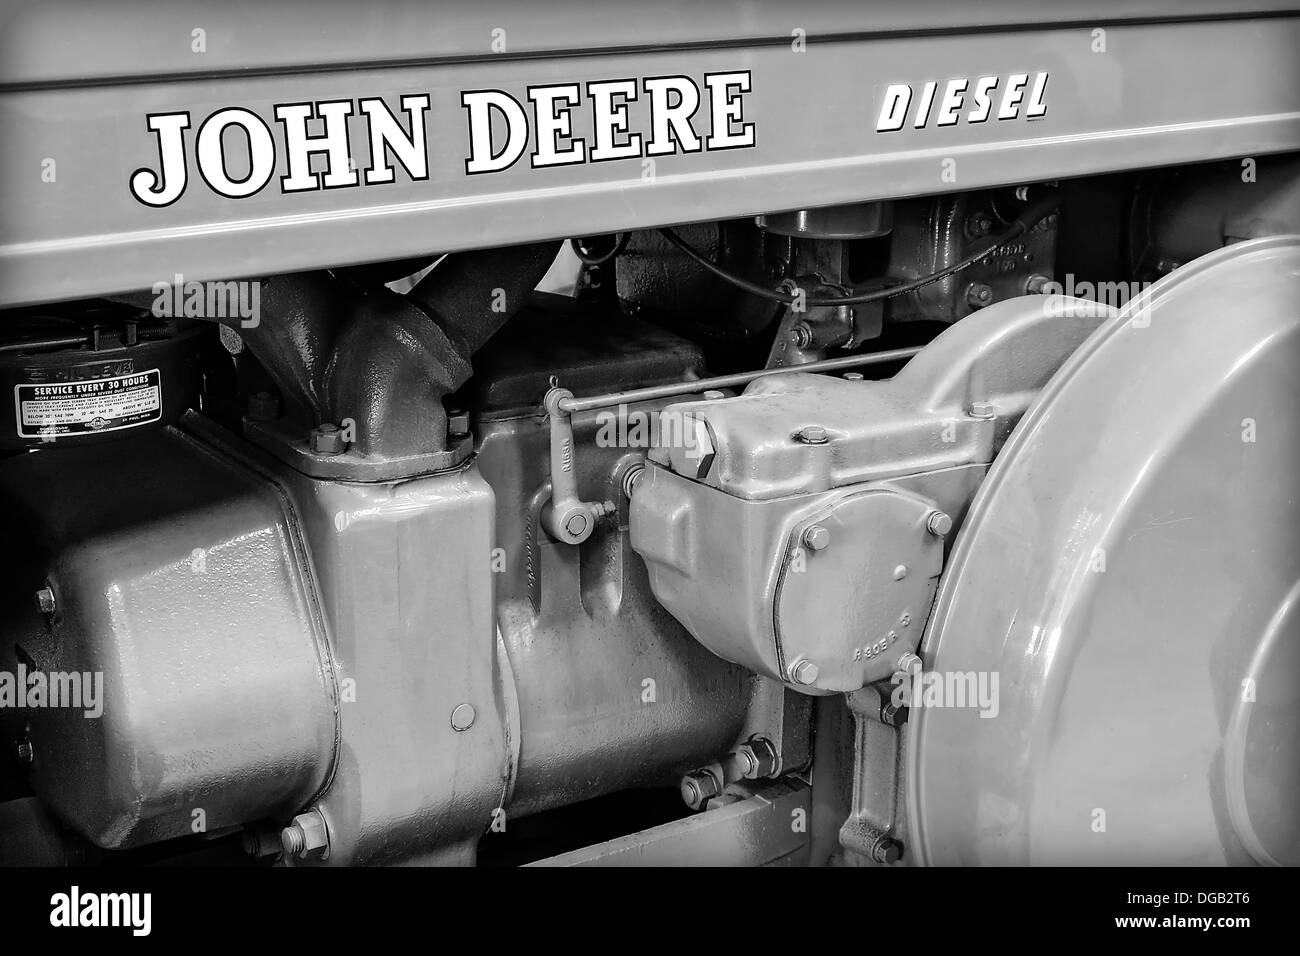 Closeup view of a John Deere tractors engine. Stock Photo